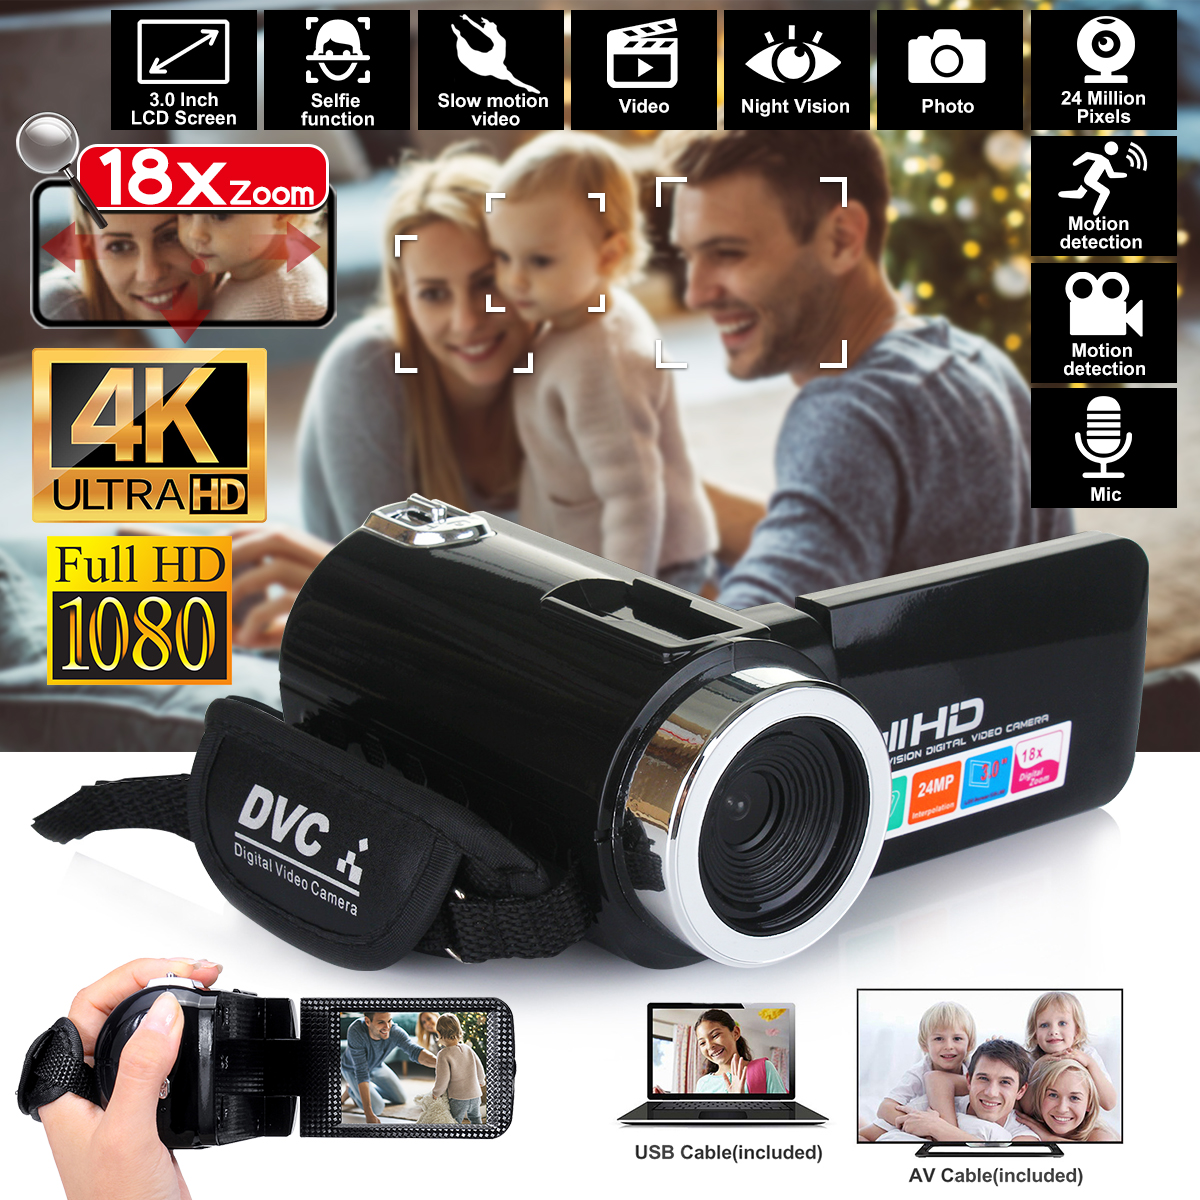 4K-Full-HD-1080P-24MP-18X-Zoom-3-Inch-LCD-Digital-Camcorder-Video-DV-Camera-50MP-CMOS-Sensor-for-You-1666762-2